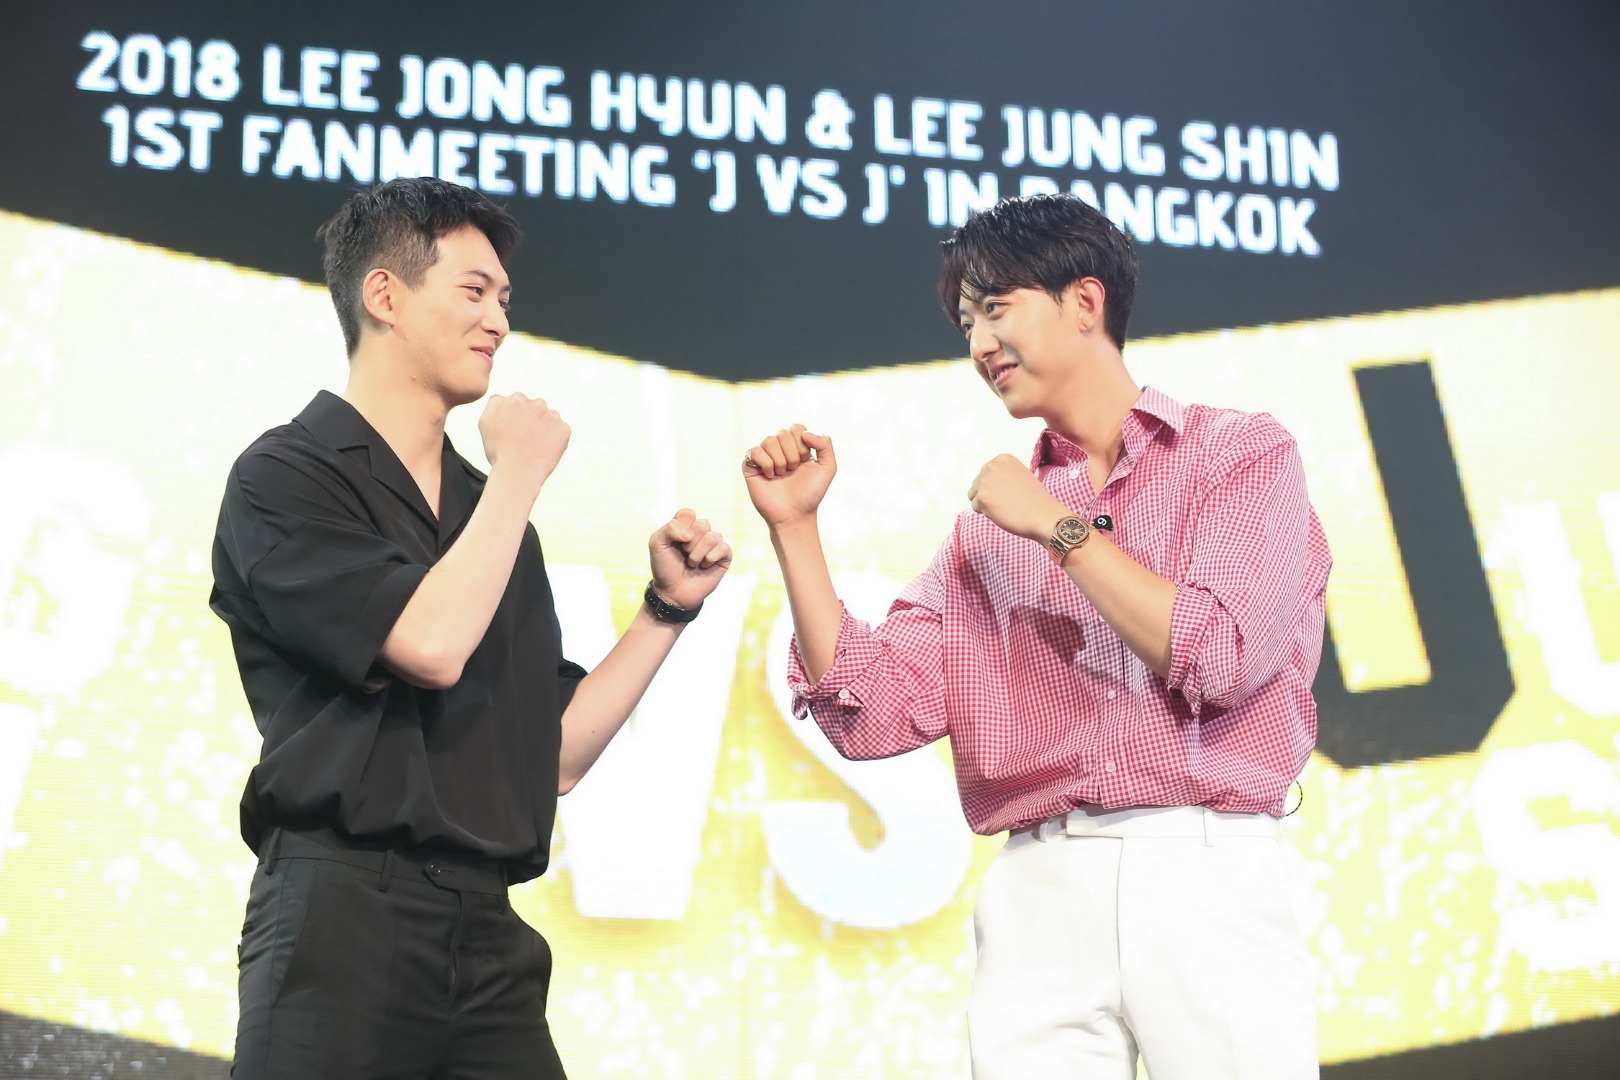 2018 LEE JONG HYUN & LEE JUNG SHIN 1st FANMEETING 'J VS J' IN BANGKOK